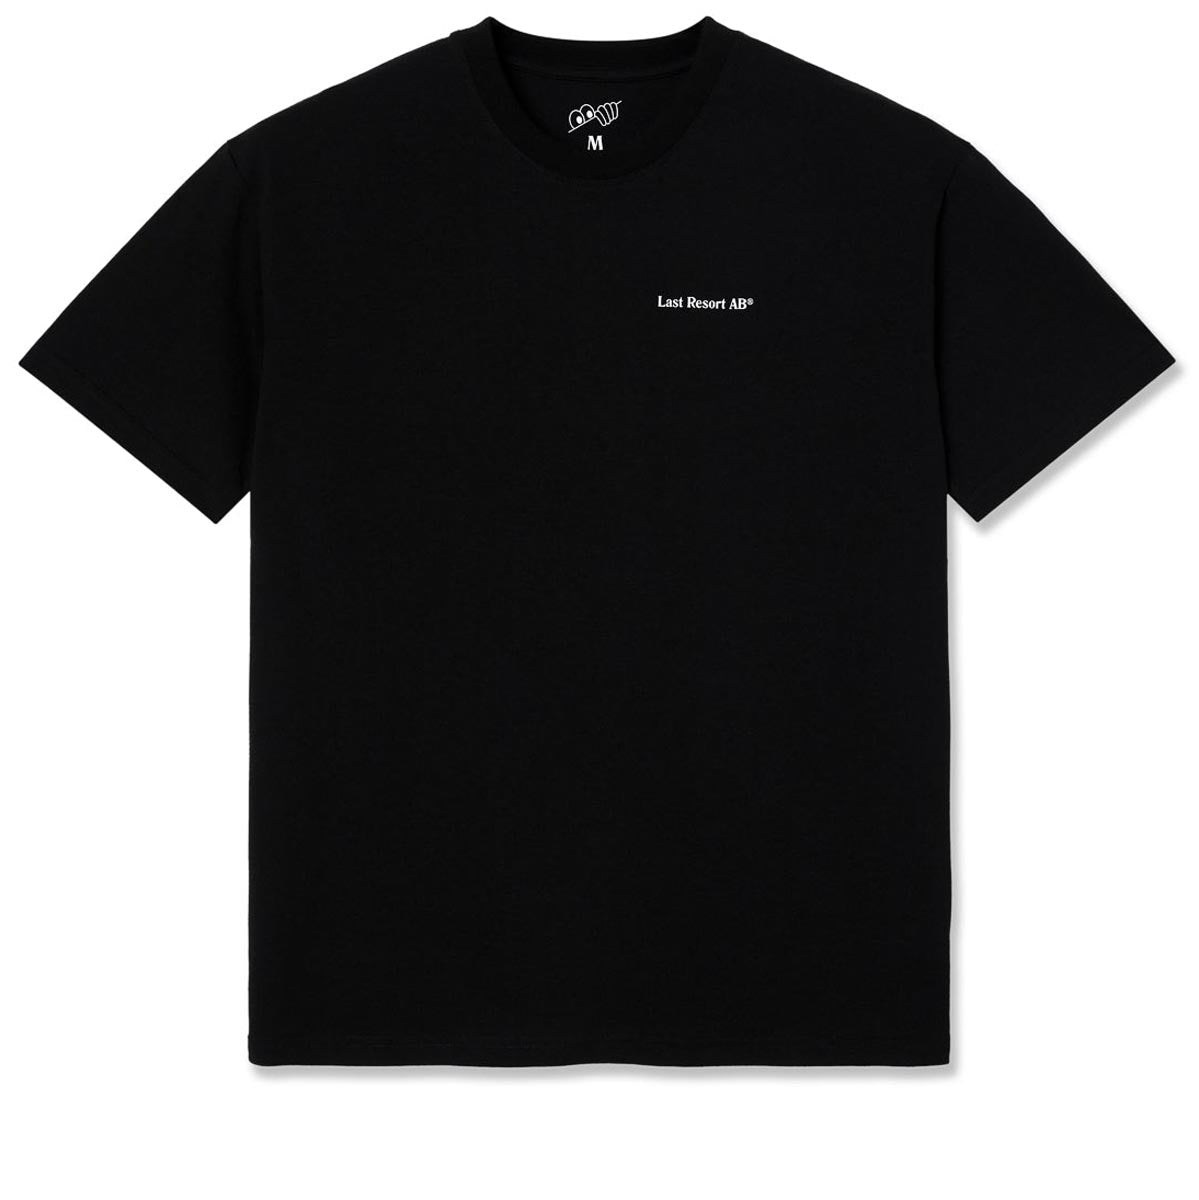 Last Resort AB 5050 T-Shirt - Black image 2